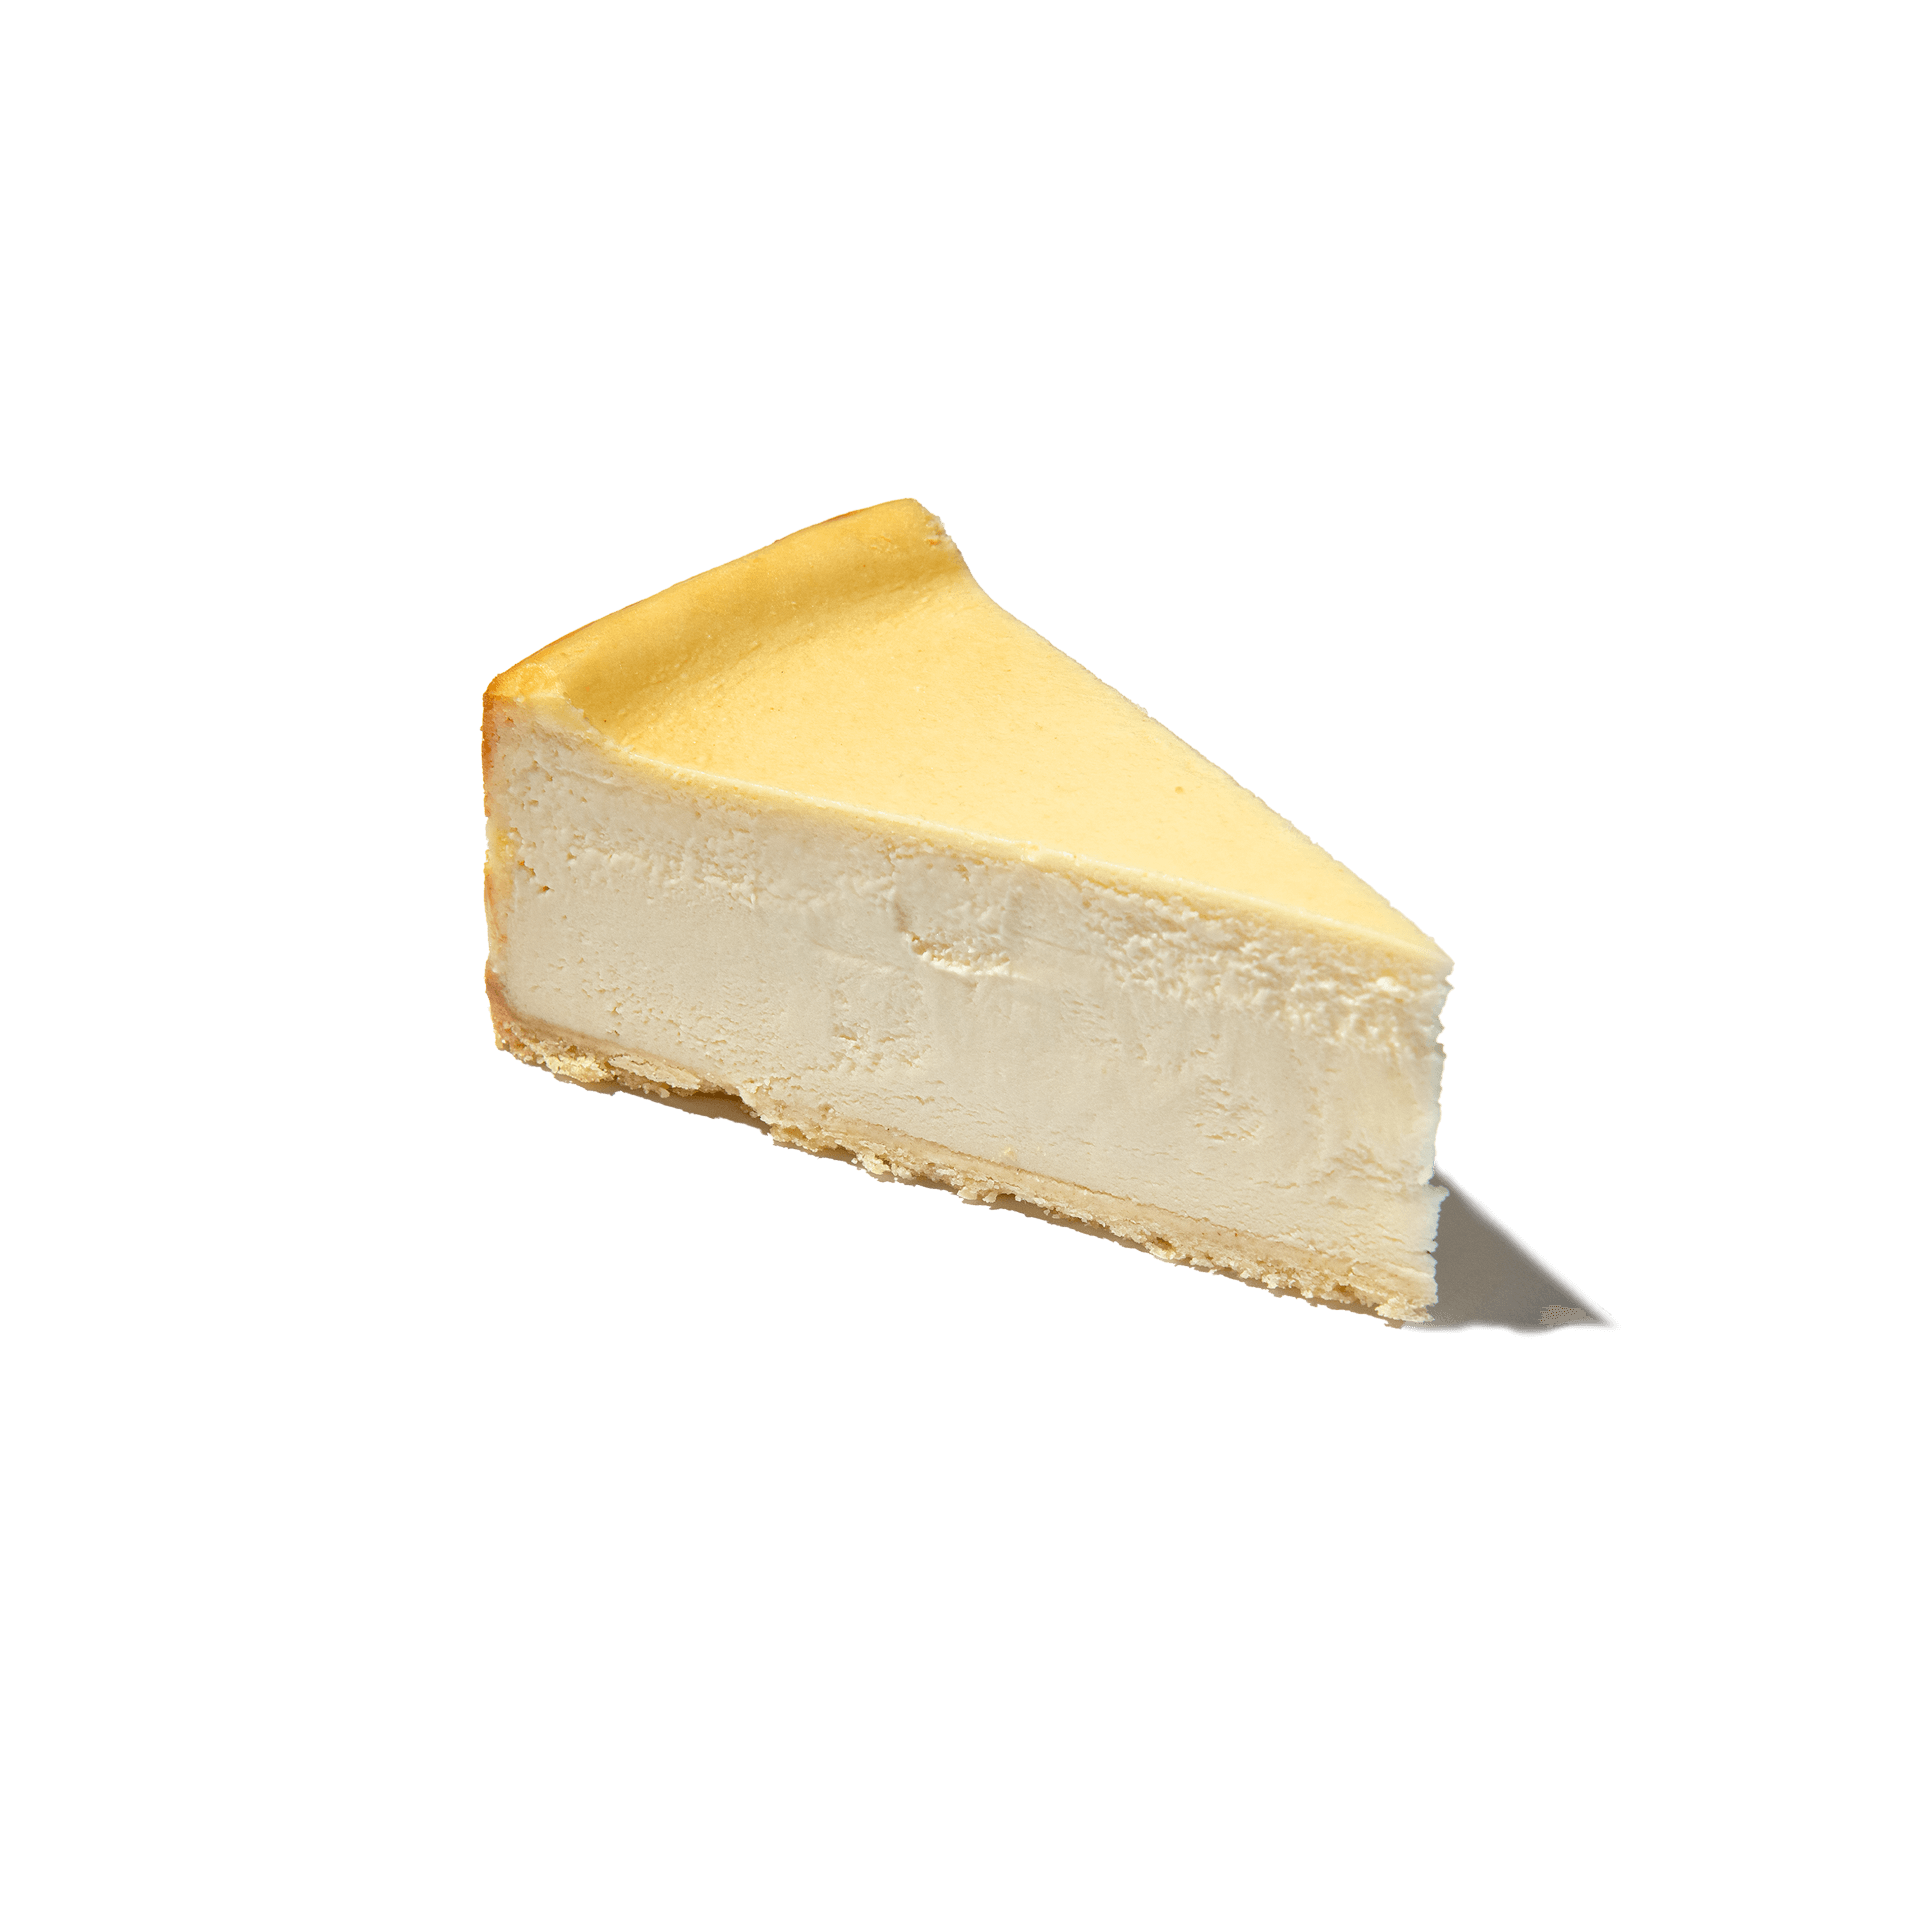 a slice of plain cheesecake